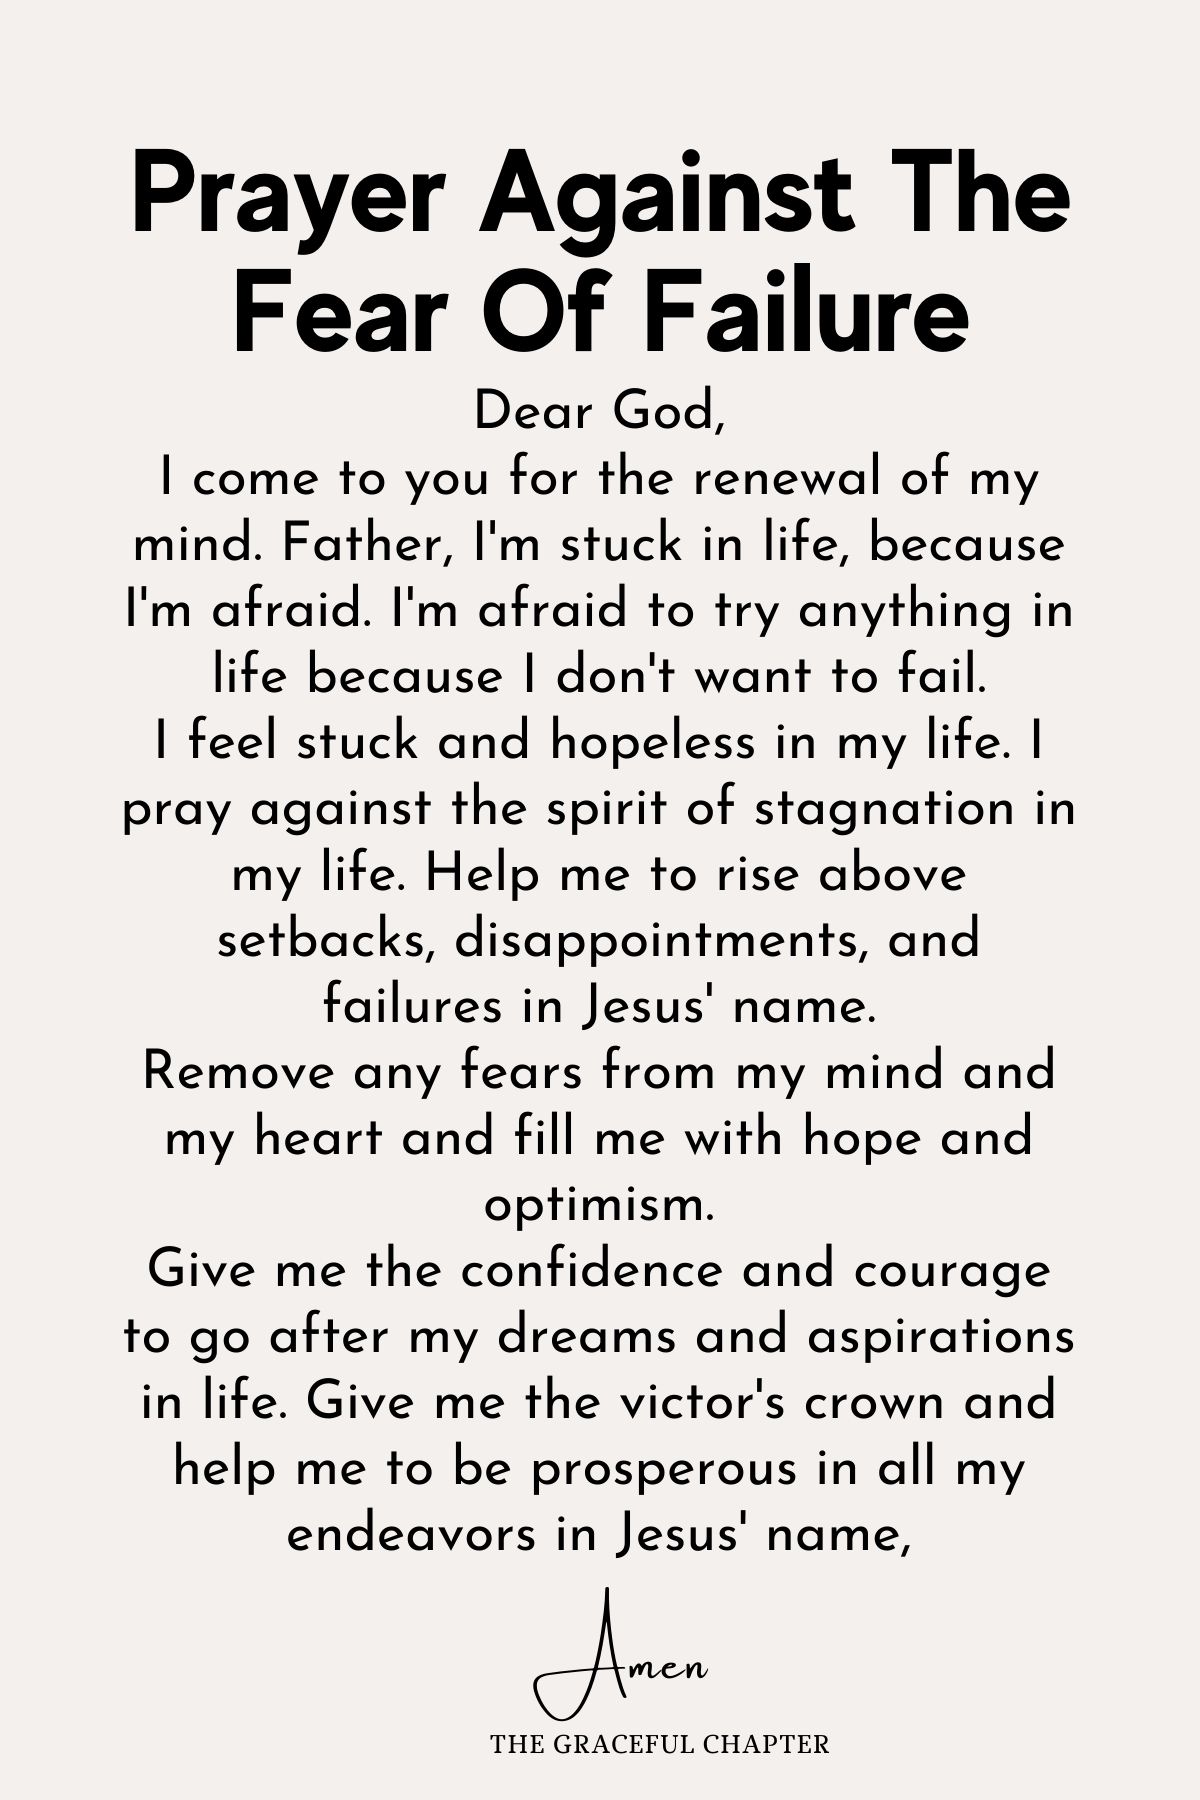 Prayer against the fear of failure